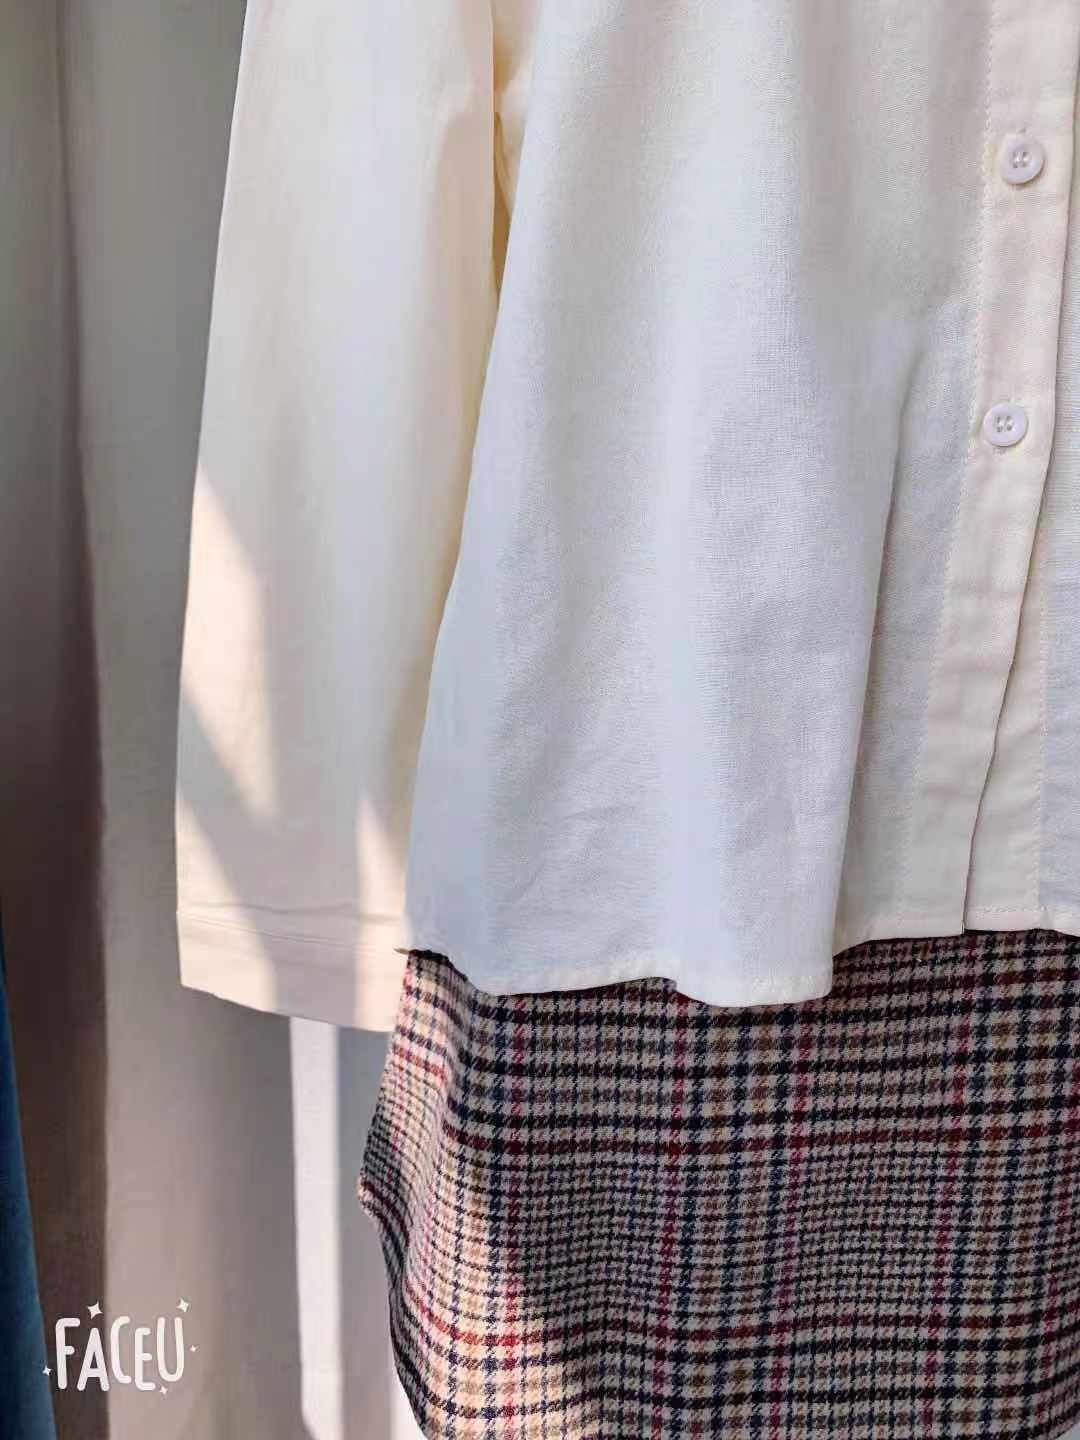 Plaid Mini Vintage High Waist Straight Short Skirt and Shirt